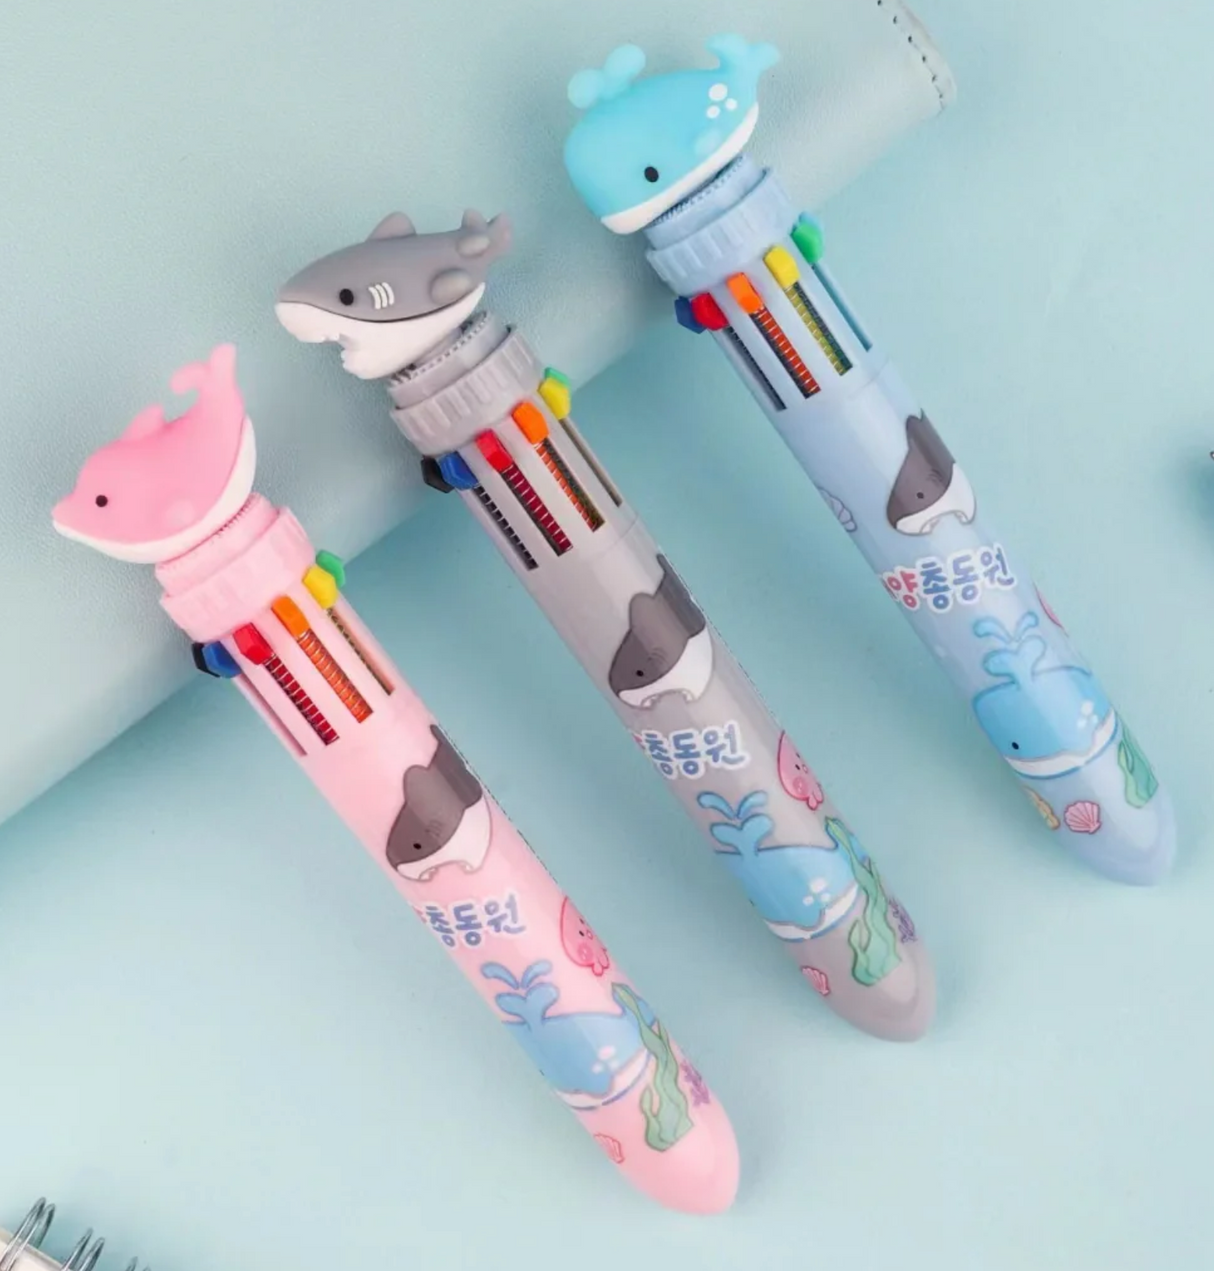 10-Color Pen | Sea Creature